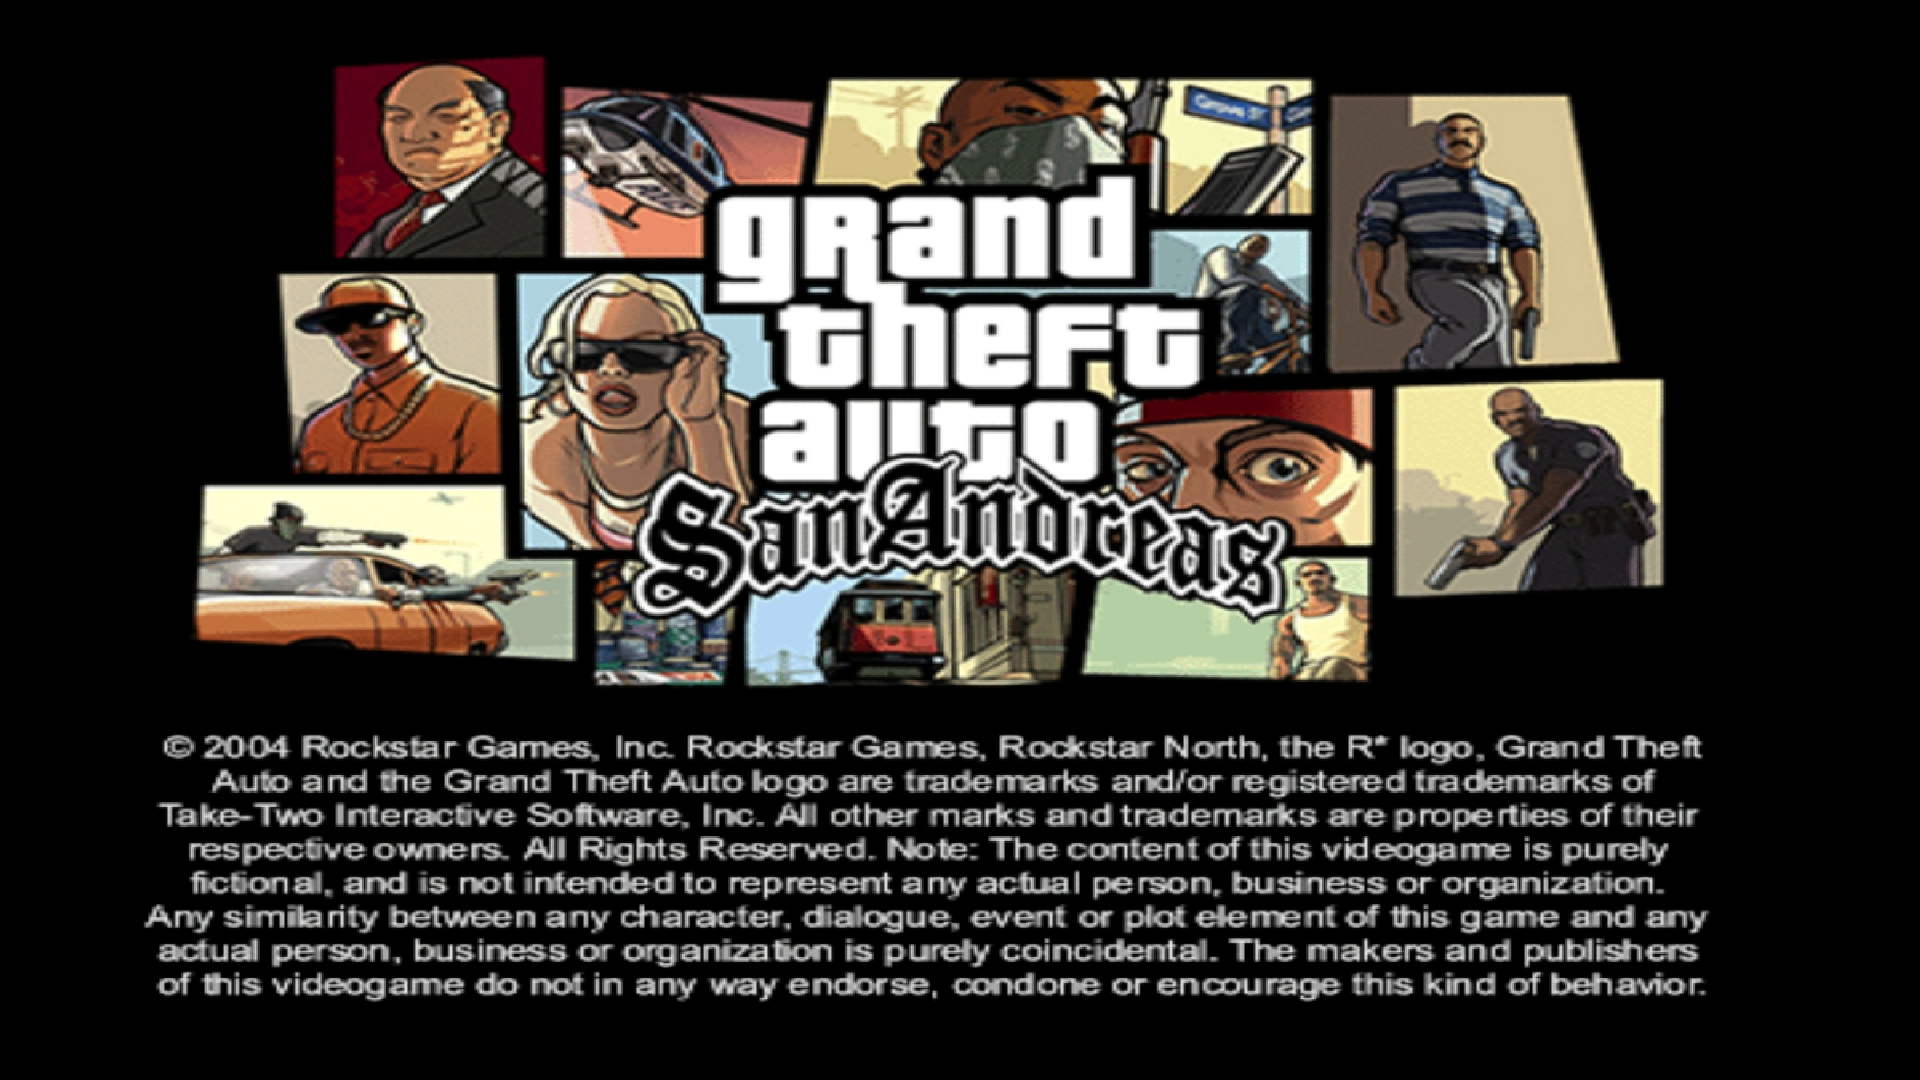 Grand Theft Auto: San Andreas (PS2) / Grand Theft Auto: San